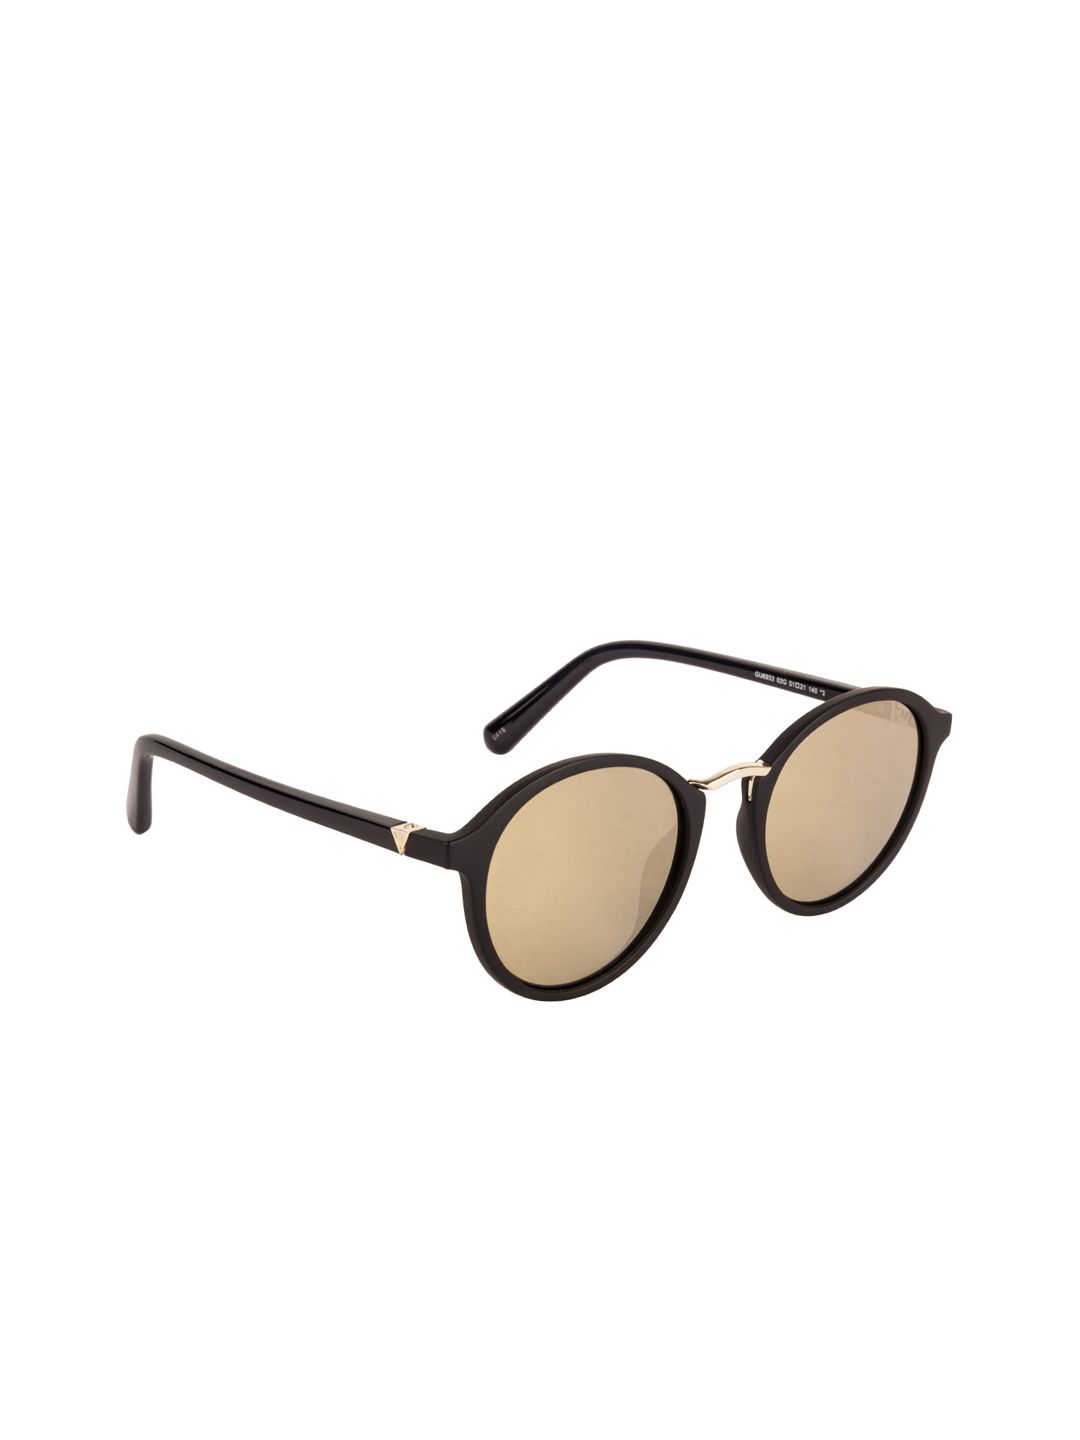 GUESS Women Round Sunglasses GU6932 51 02G Price in India